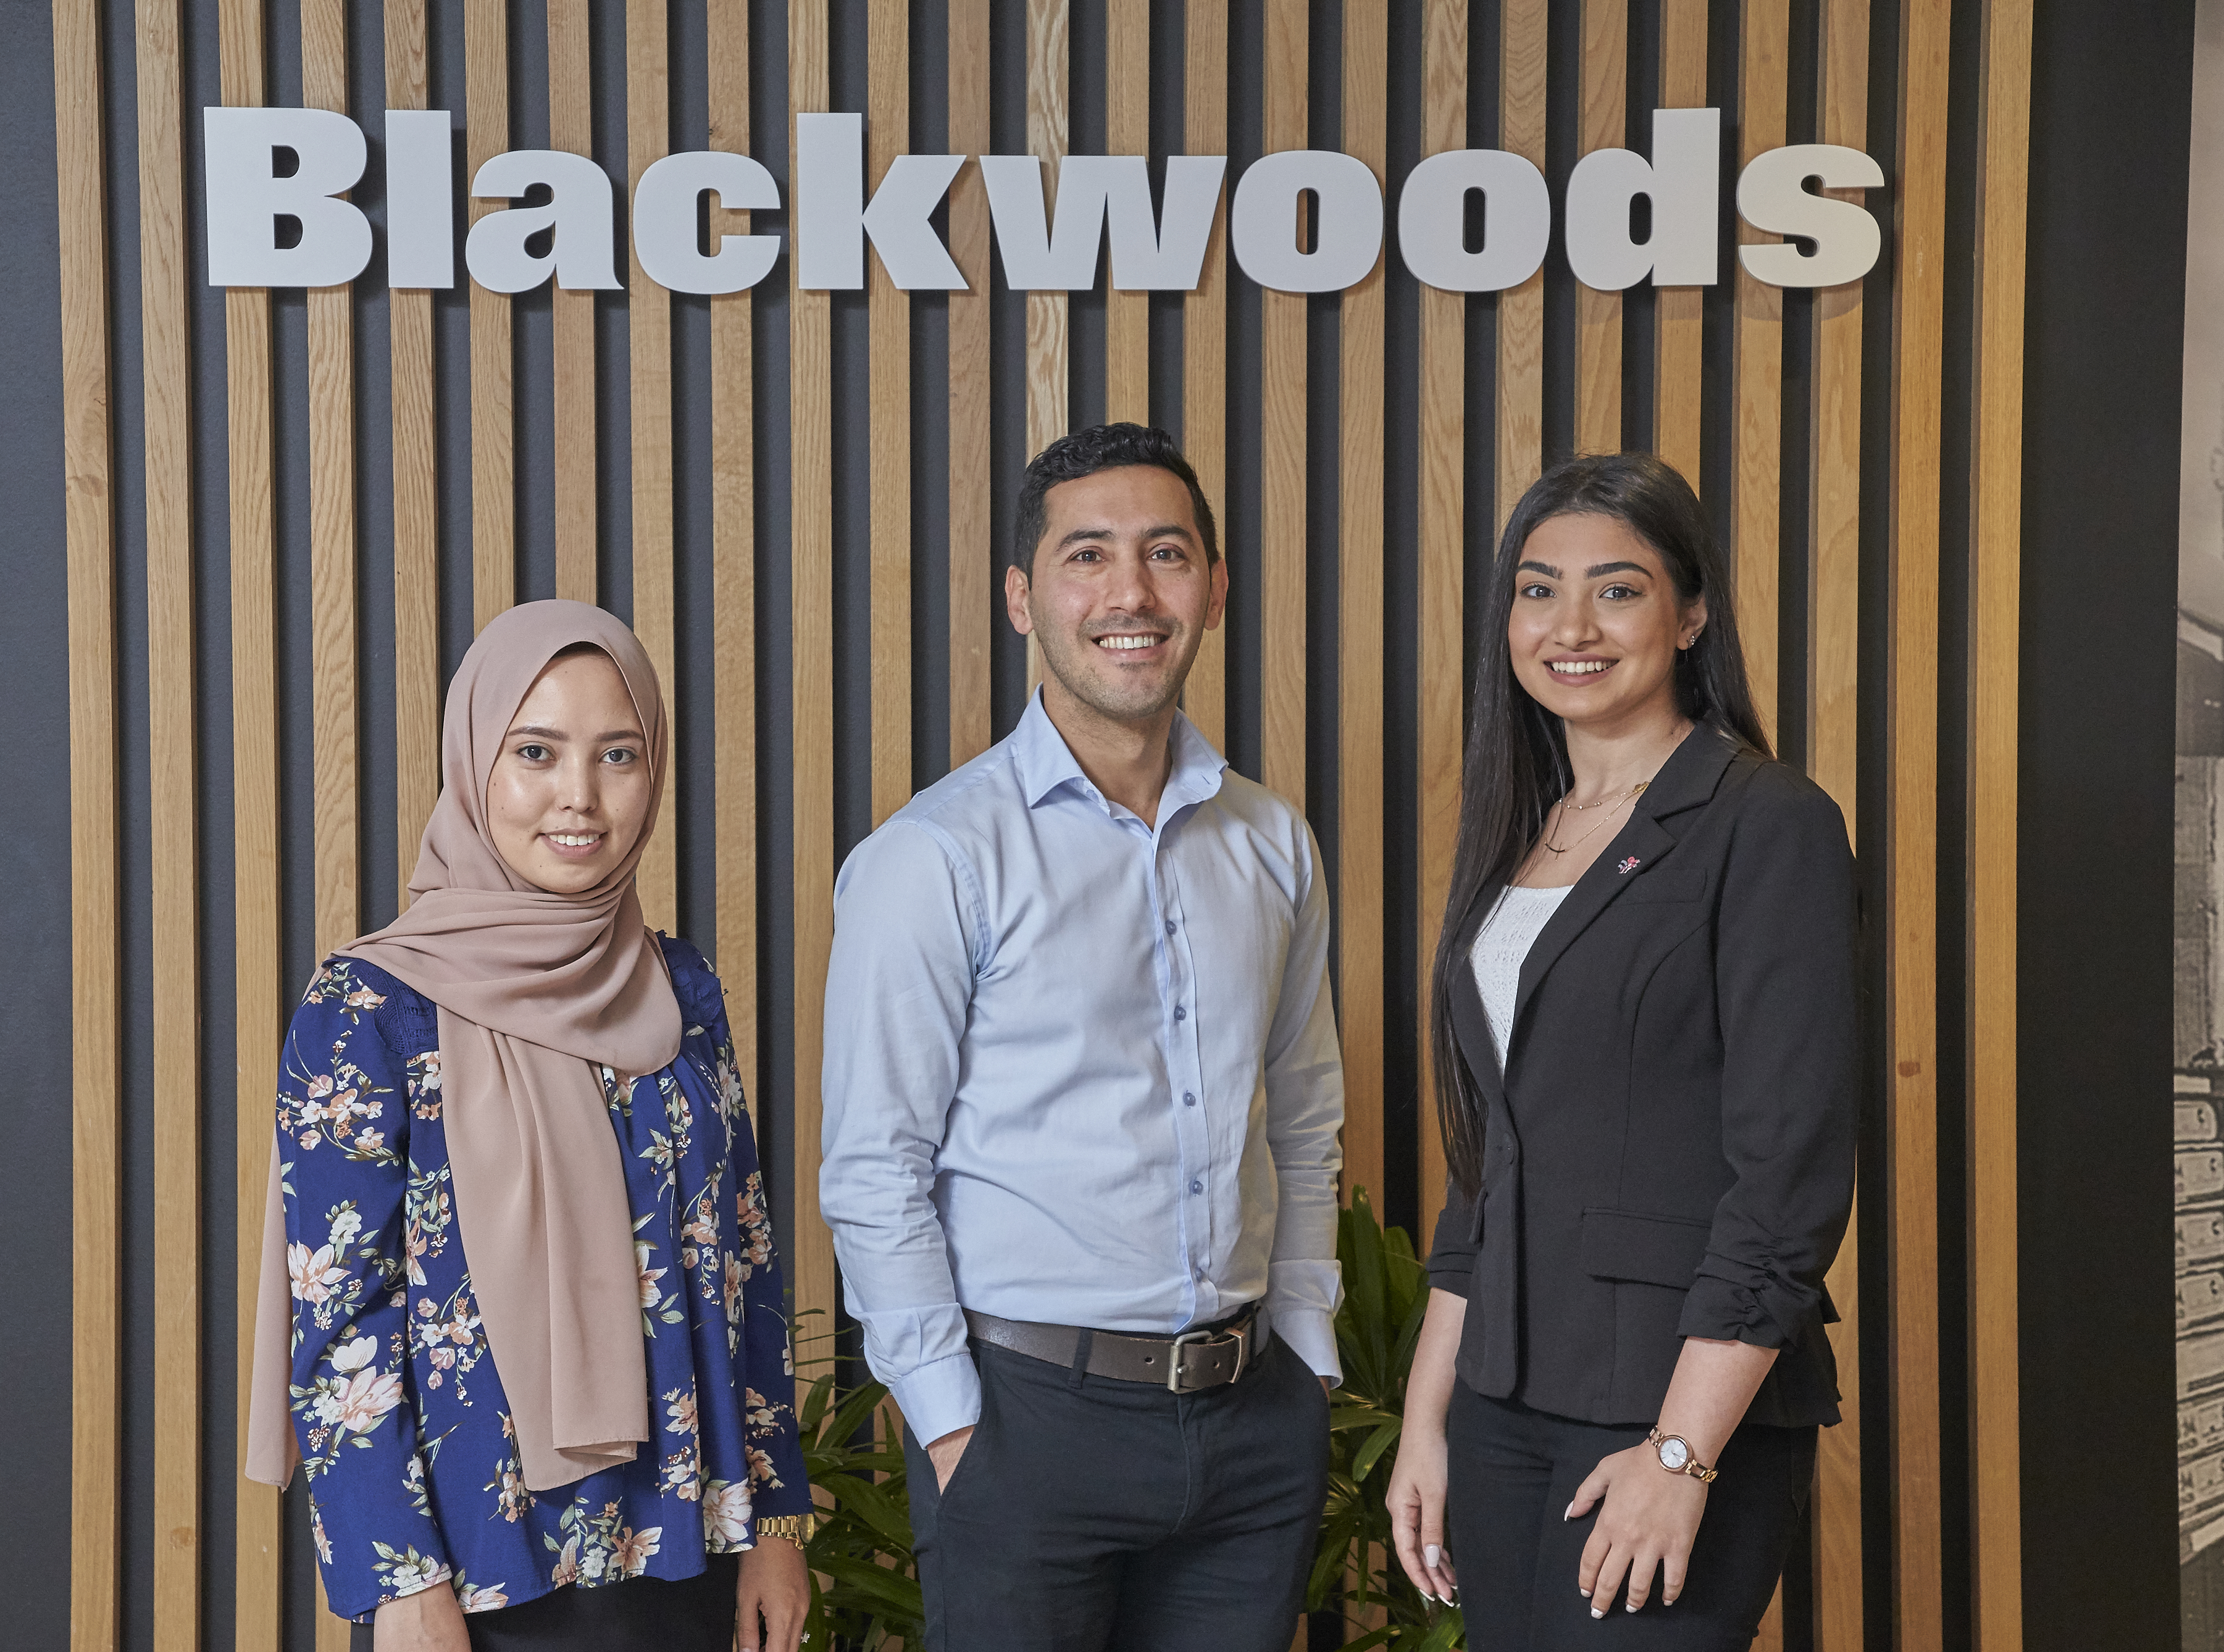 Blackwoods opens doors for humanitarian entrants seeking professional careers